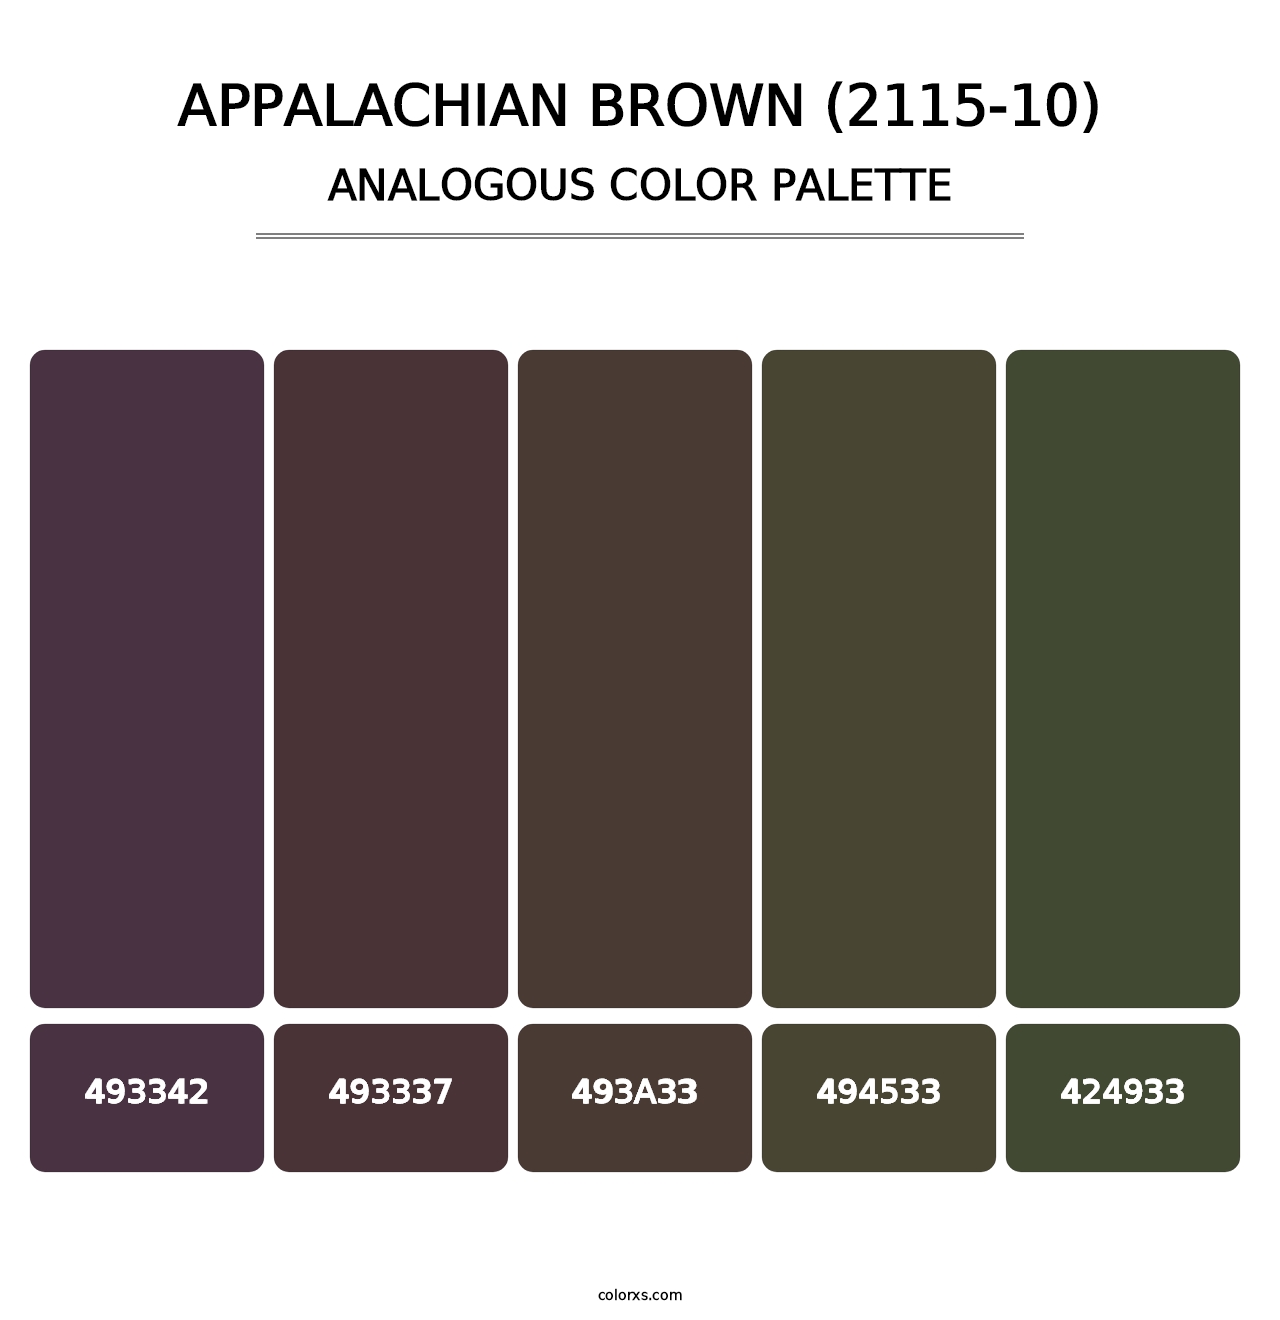 Appalachian Brown (2115-10) - Analogous Color Palette